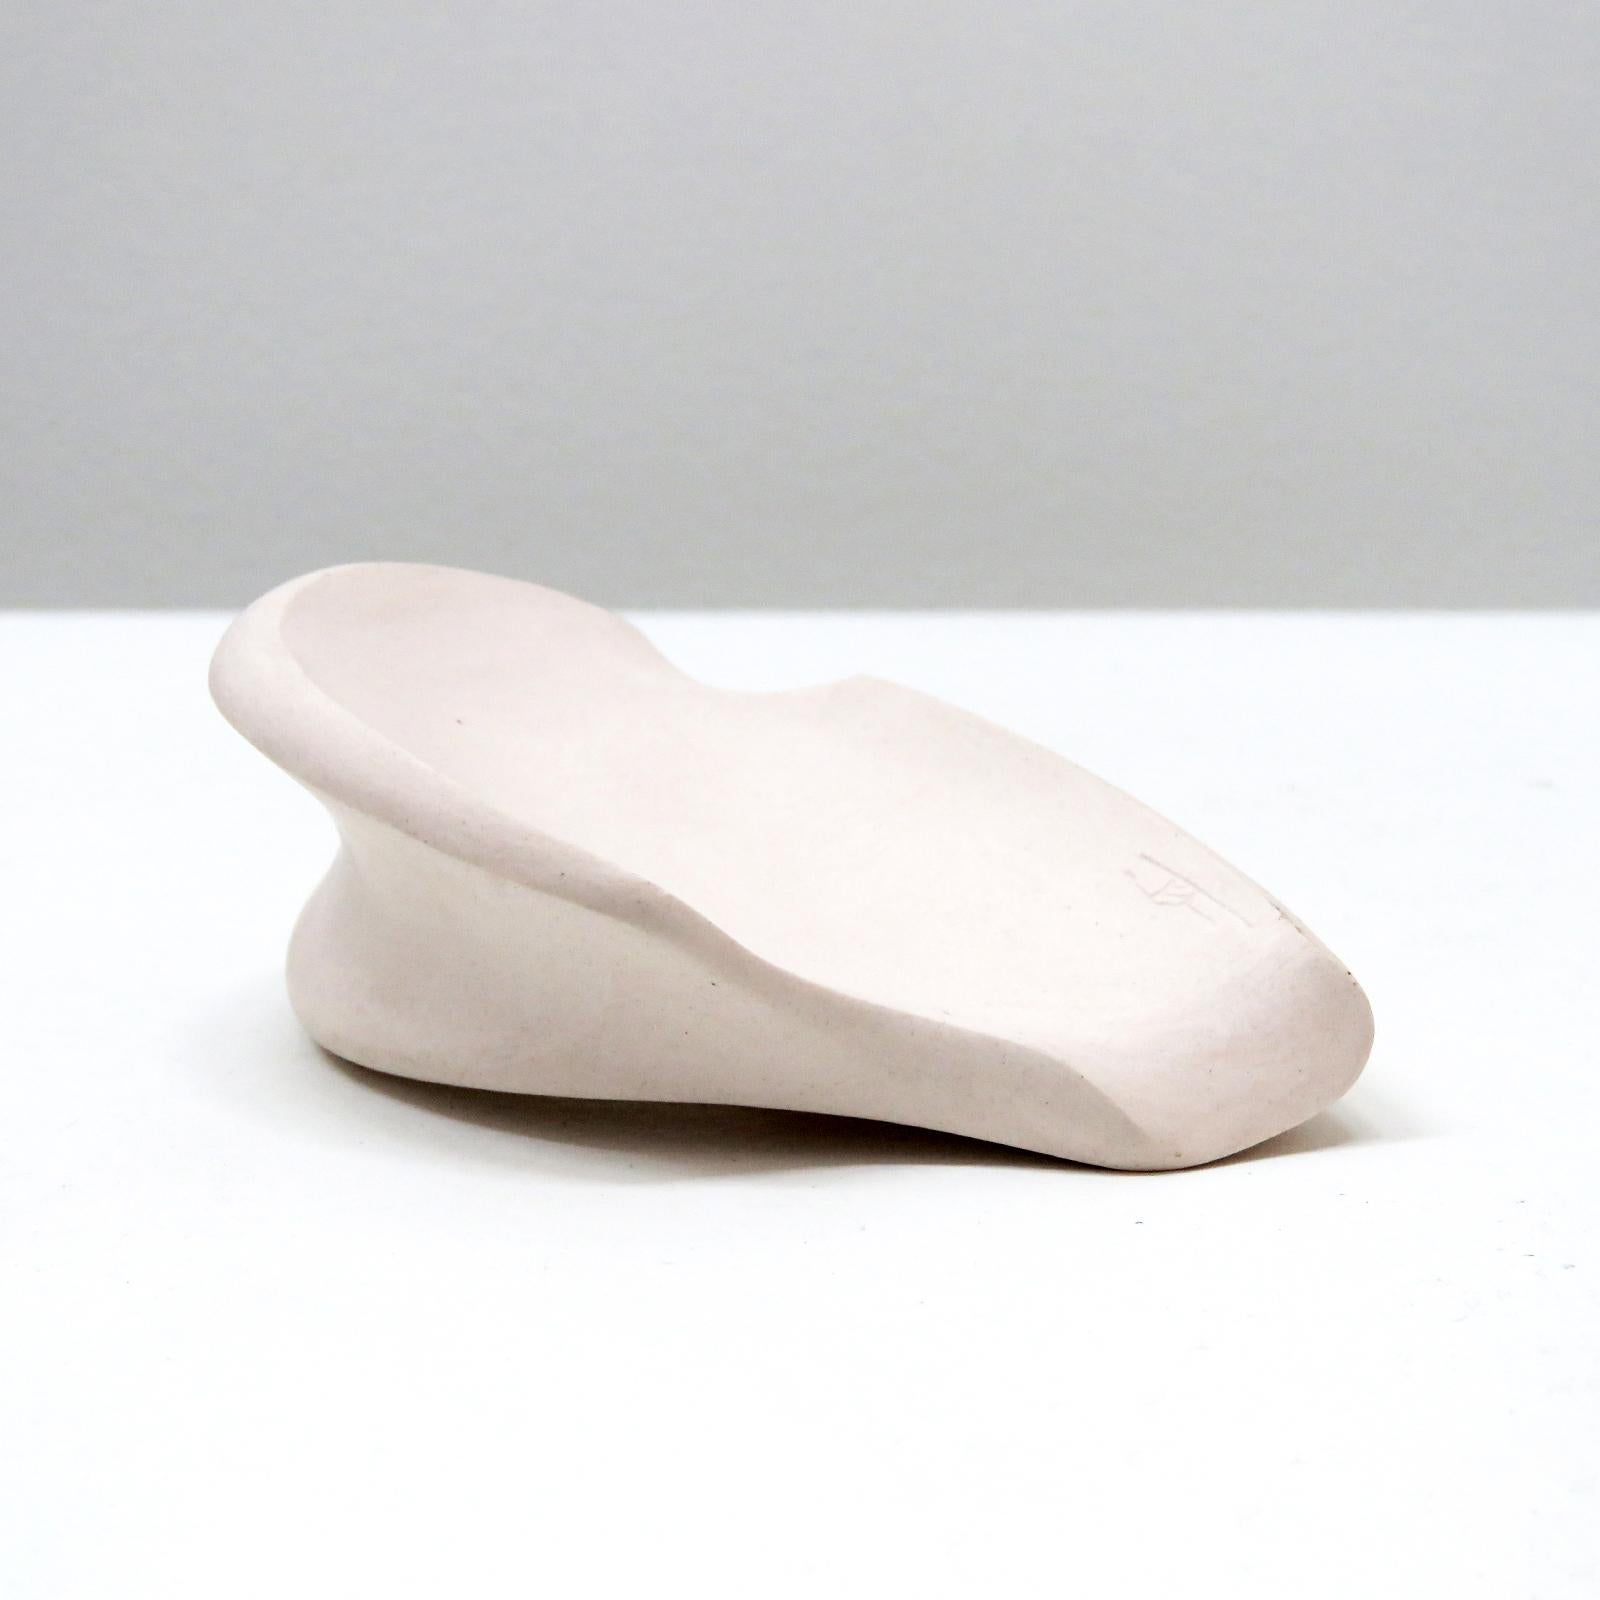 Organic Modern Sculptural Palmstone 'Ear' by Jed Farlow  For Sale